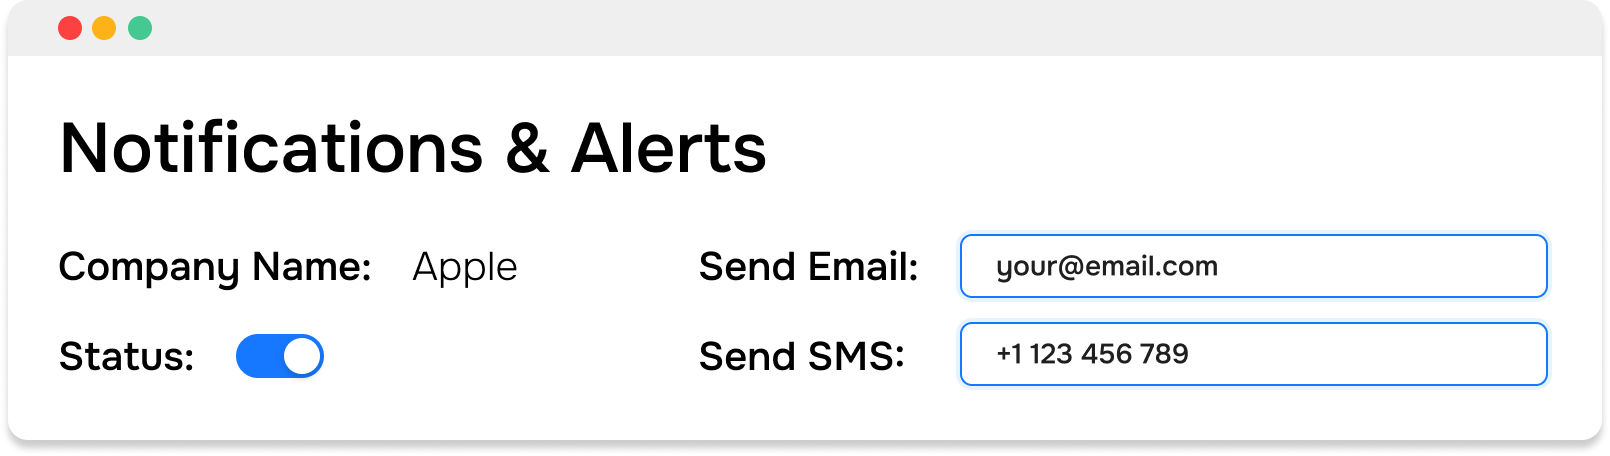 Alerts notification setup